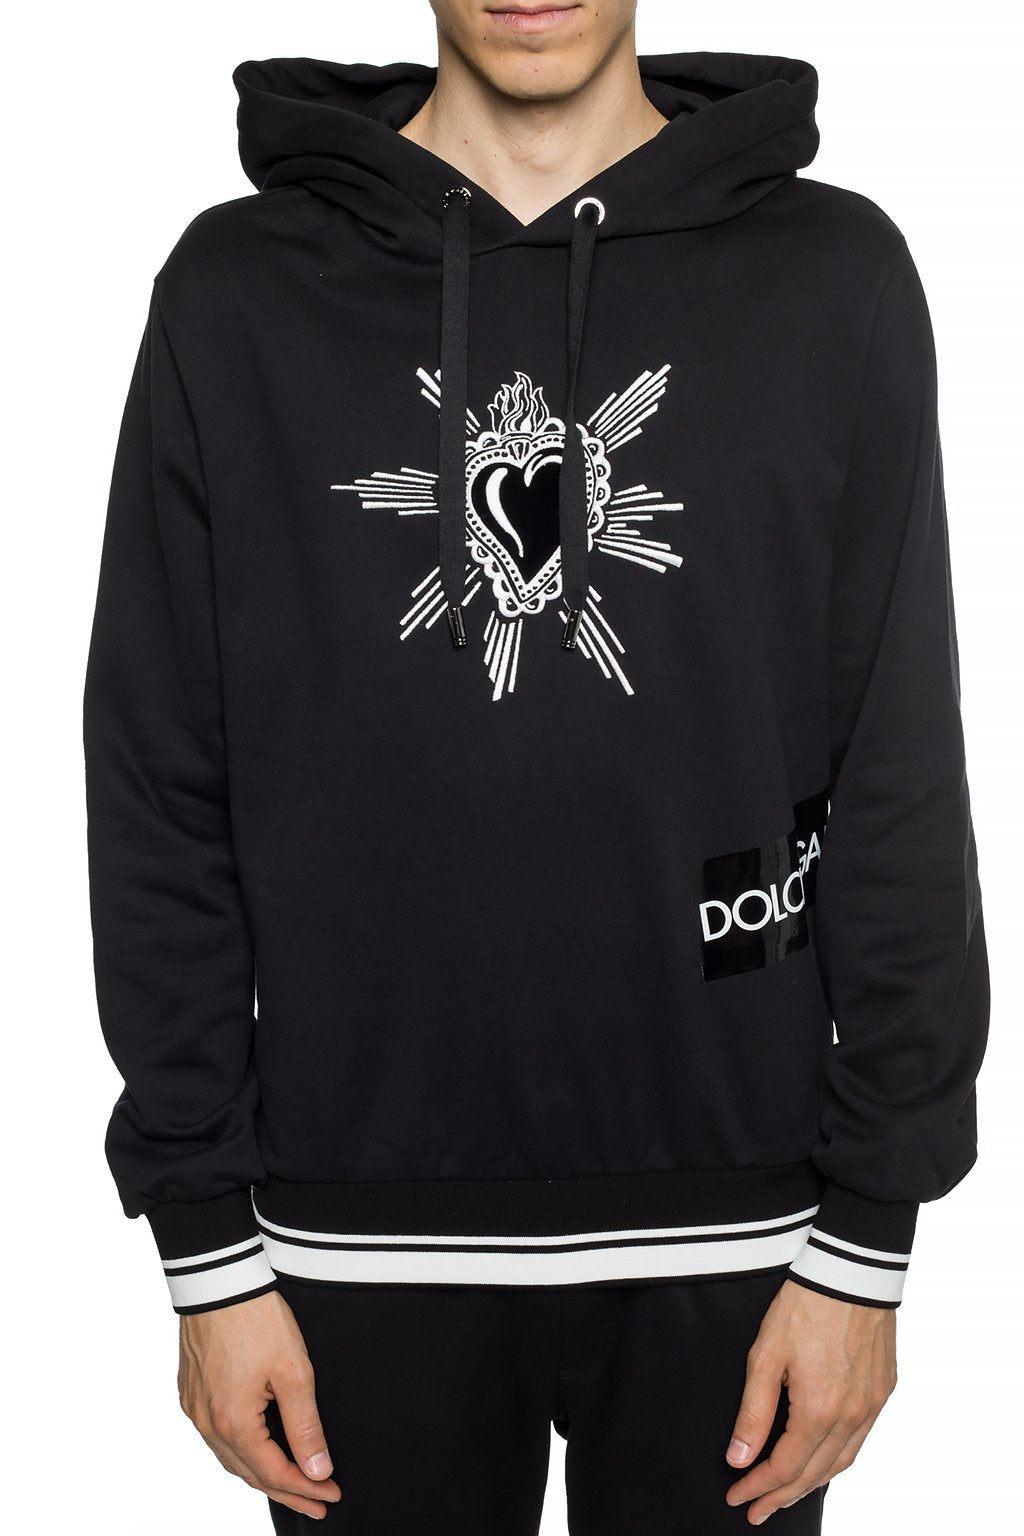 Dolce & Gabbana Black Embroidered Hoodie